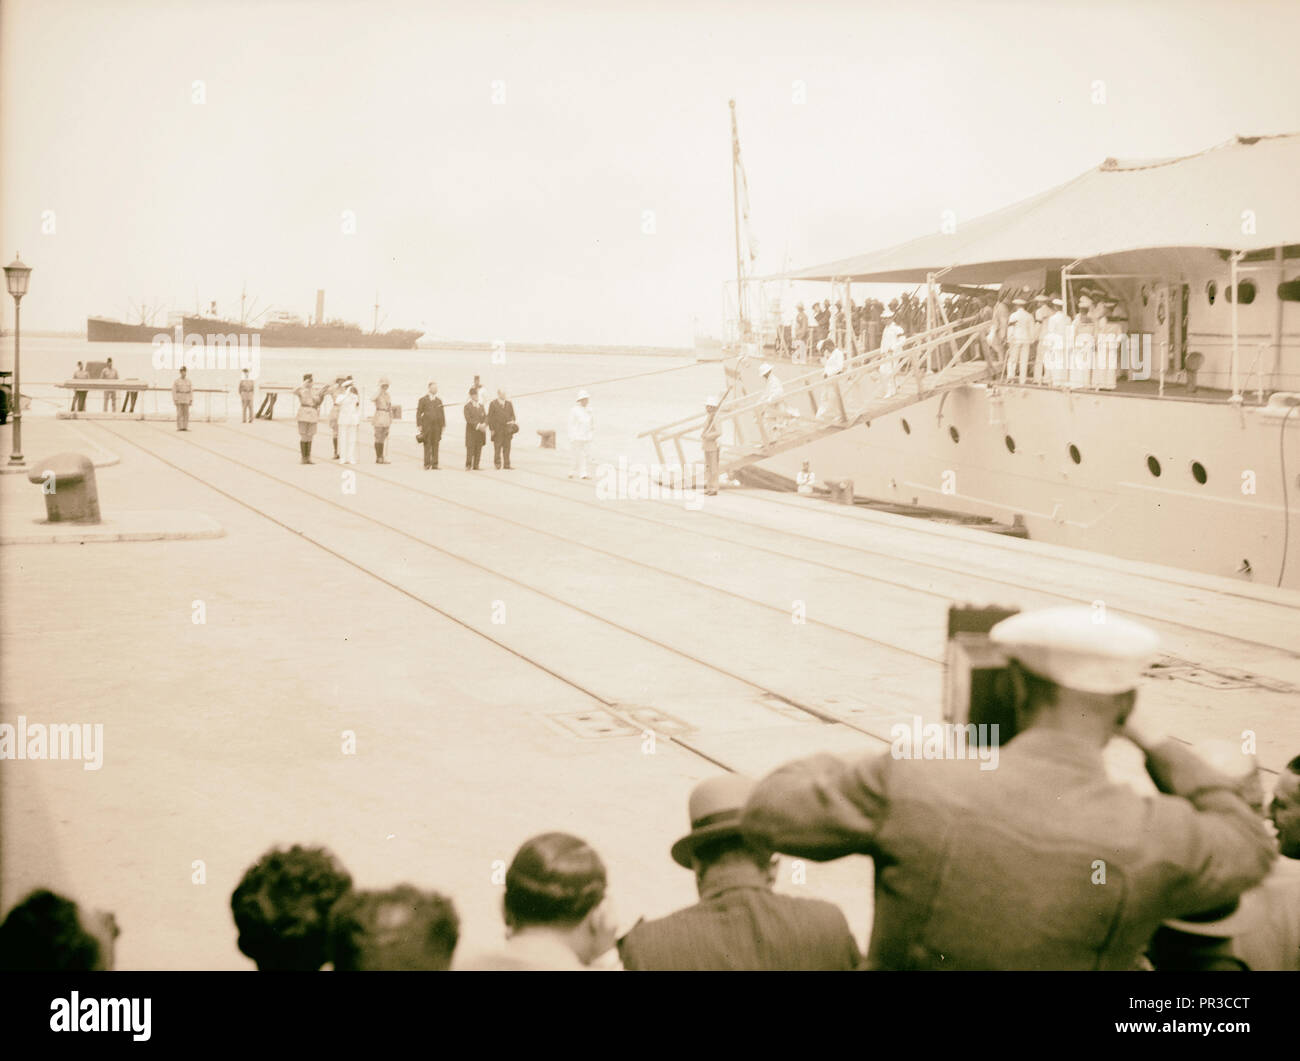 Arrival of the Negus to Haifa. Photo shows the family of Ethiopian Emperor Haile Selassie I arriving at Haifa on the British Stock Photo